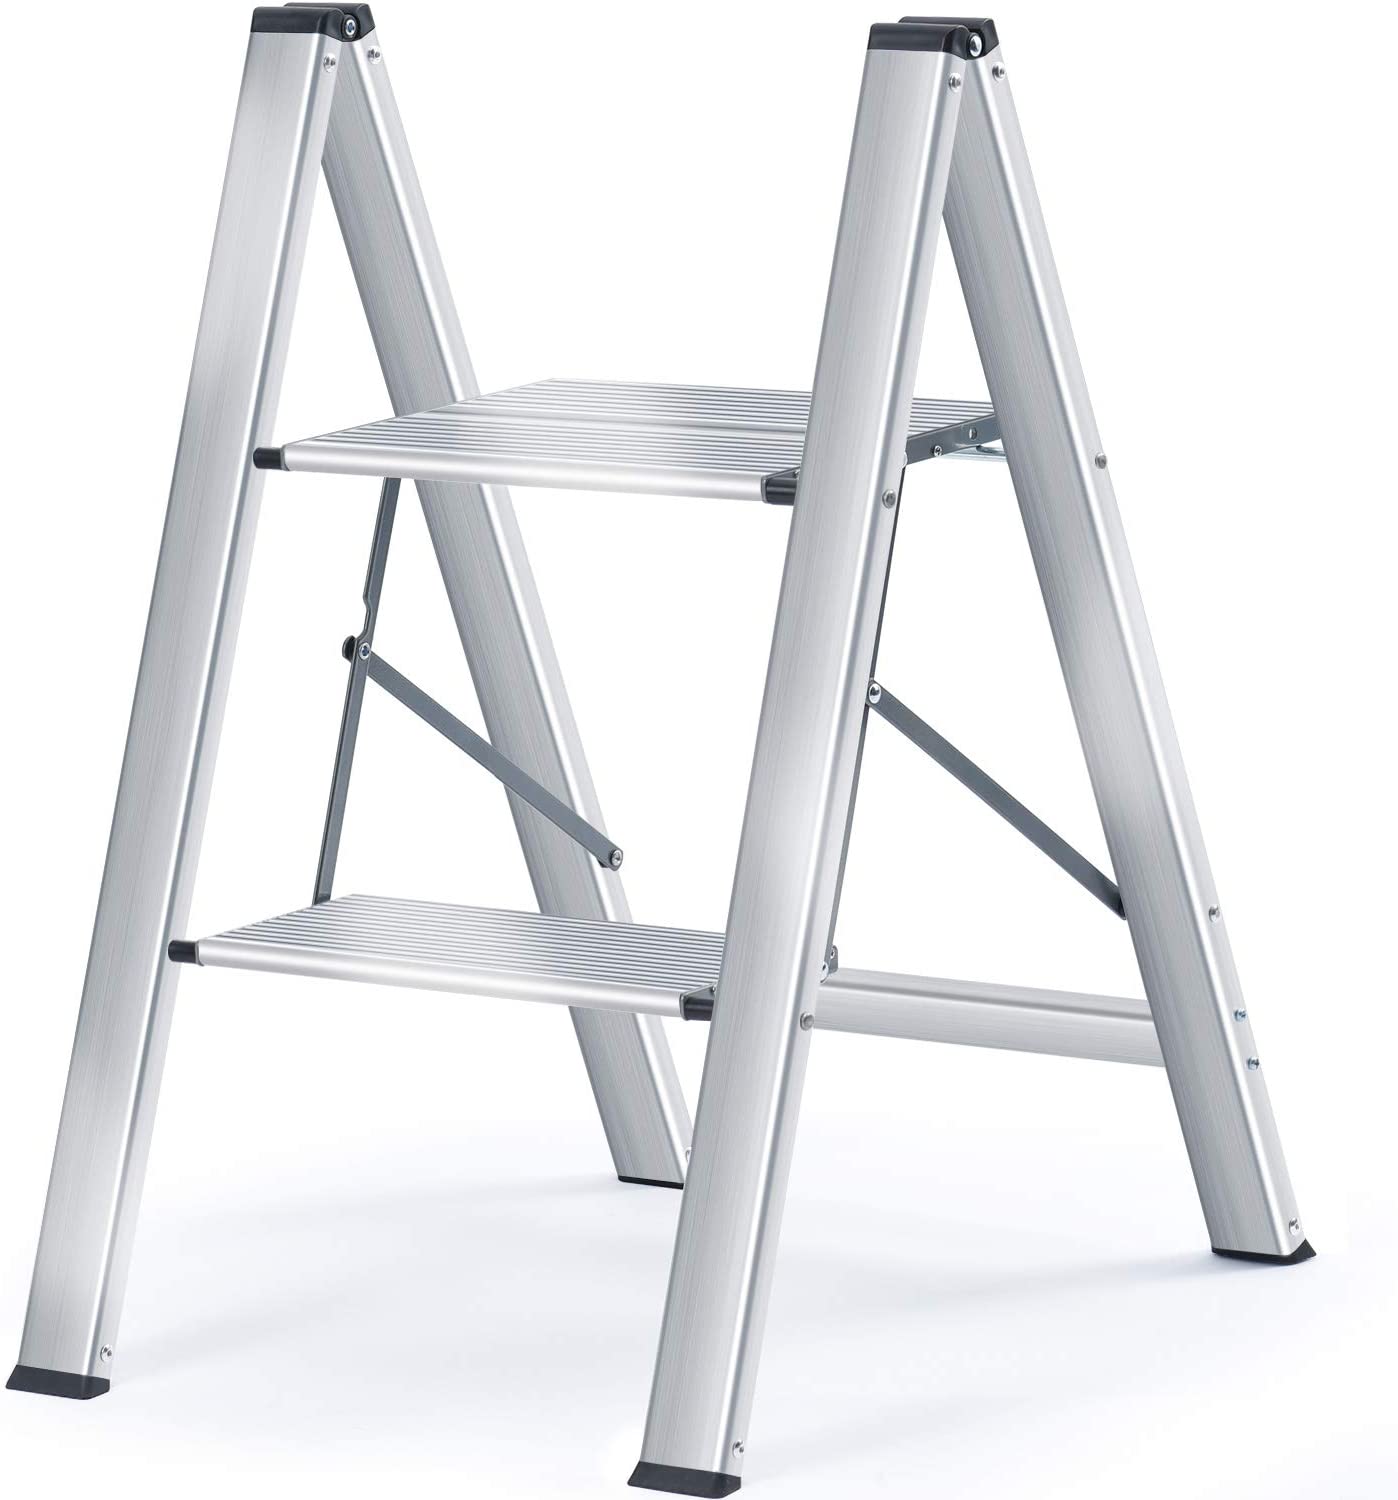 KK KINGRACK, Kingrack Step Ladder, 2 Step Aluminium Folding Step Stool, Portable Ladder with Large Platform,Slim Household Stepladder with Milti-fuction. WKUK3003-2 (2 Step)